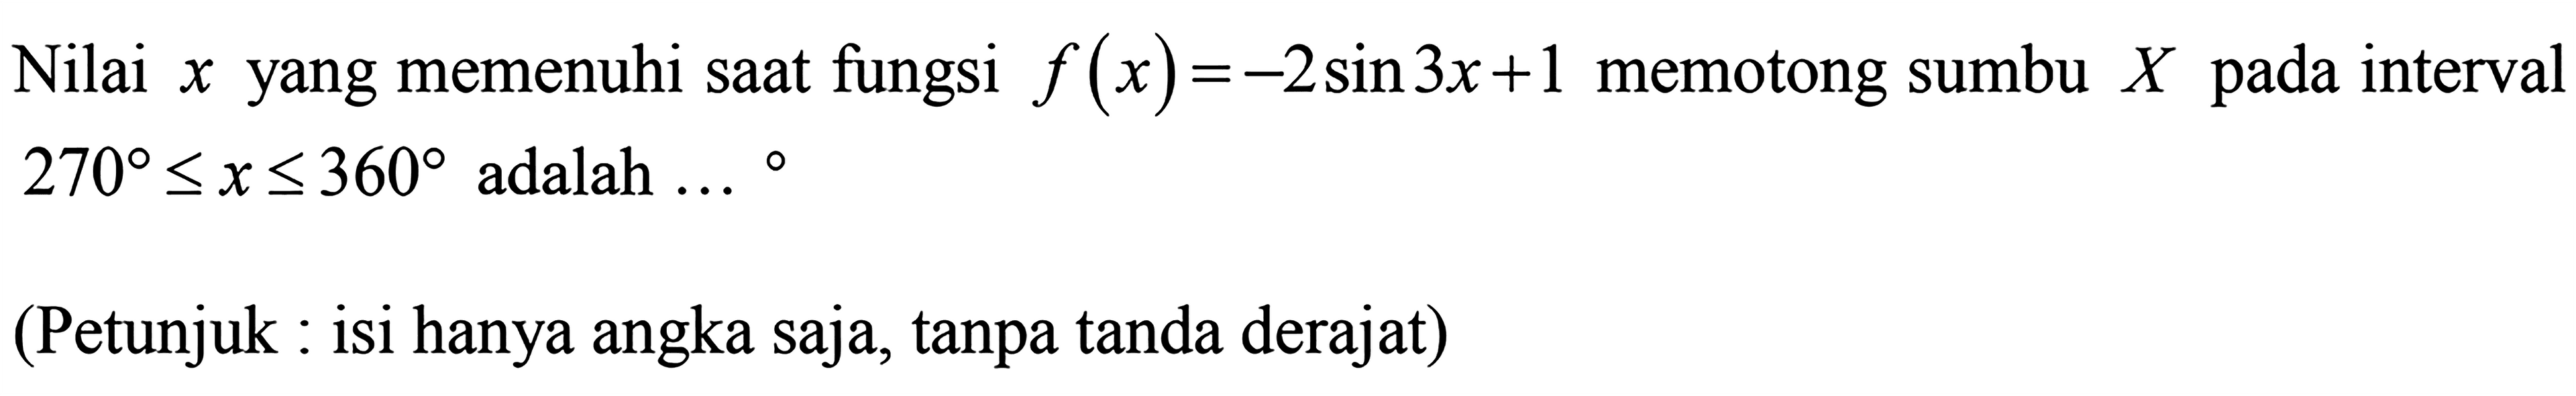 Nilai x yang memenuhi saat fungsi f(x)=-2sin3x+1 memotong sumbu X pada interval 270<=x<=360 adalah ... (Petunjuk : isi hanya angka saja, tanpa tanda derajat)